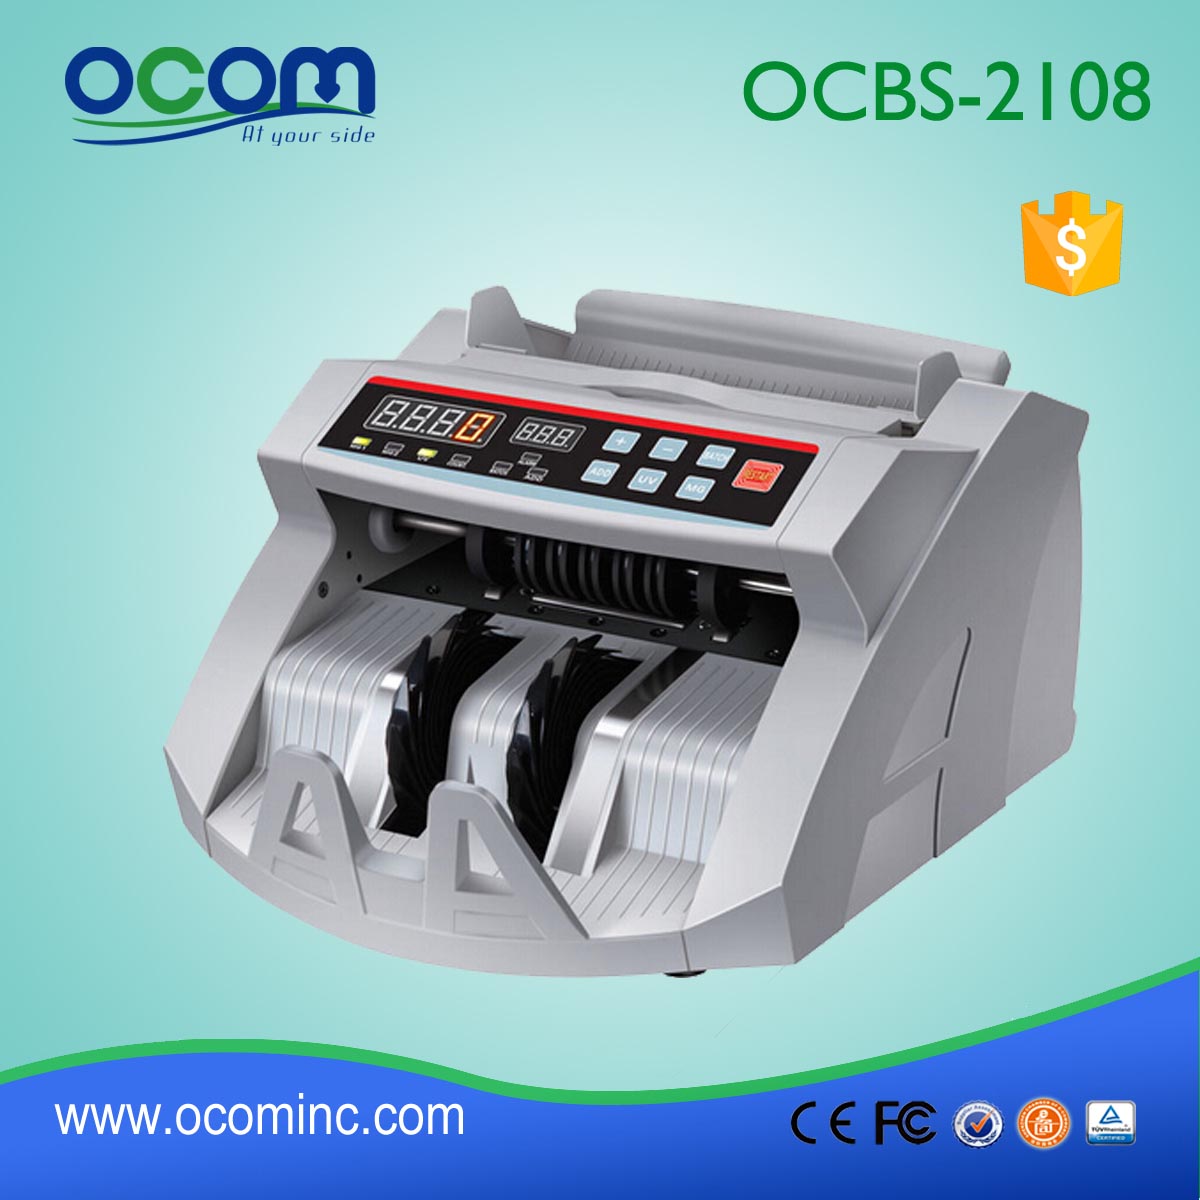 (OCBC-2108) - OCOM έκανε το 2016 νεότερο αυτόματο μετρητή νομοσχέδιο